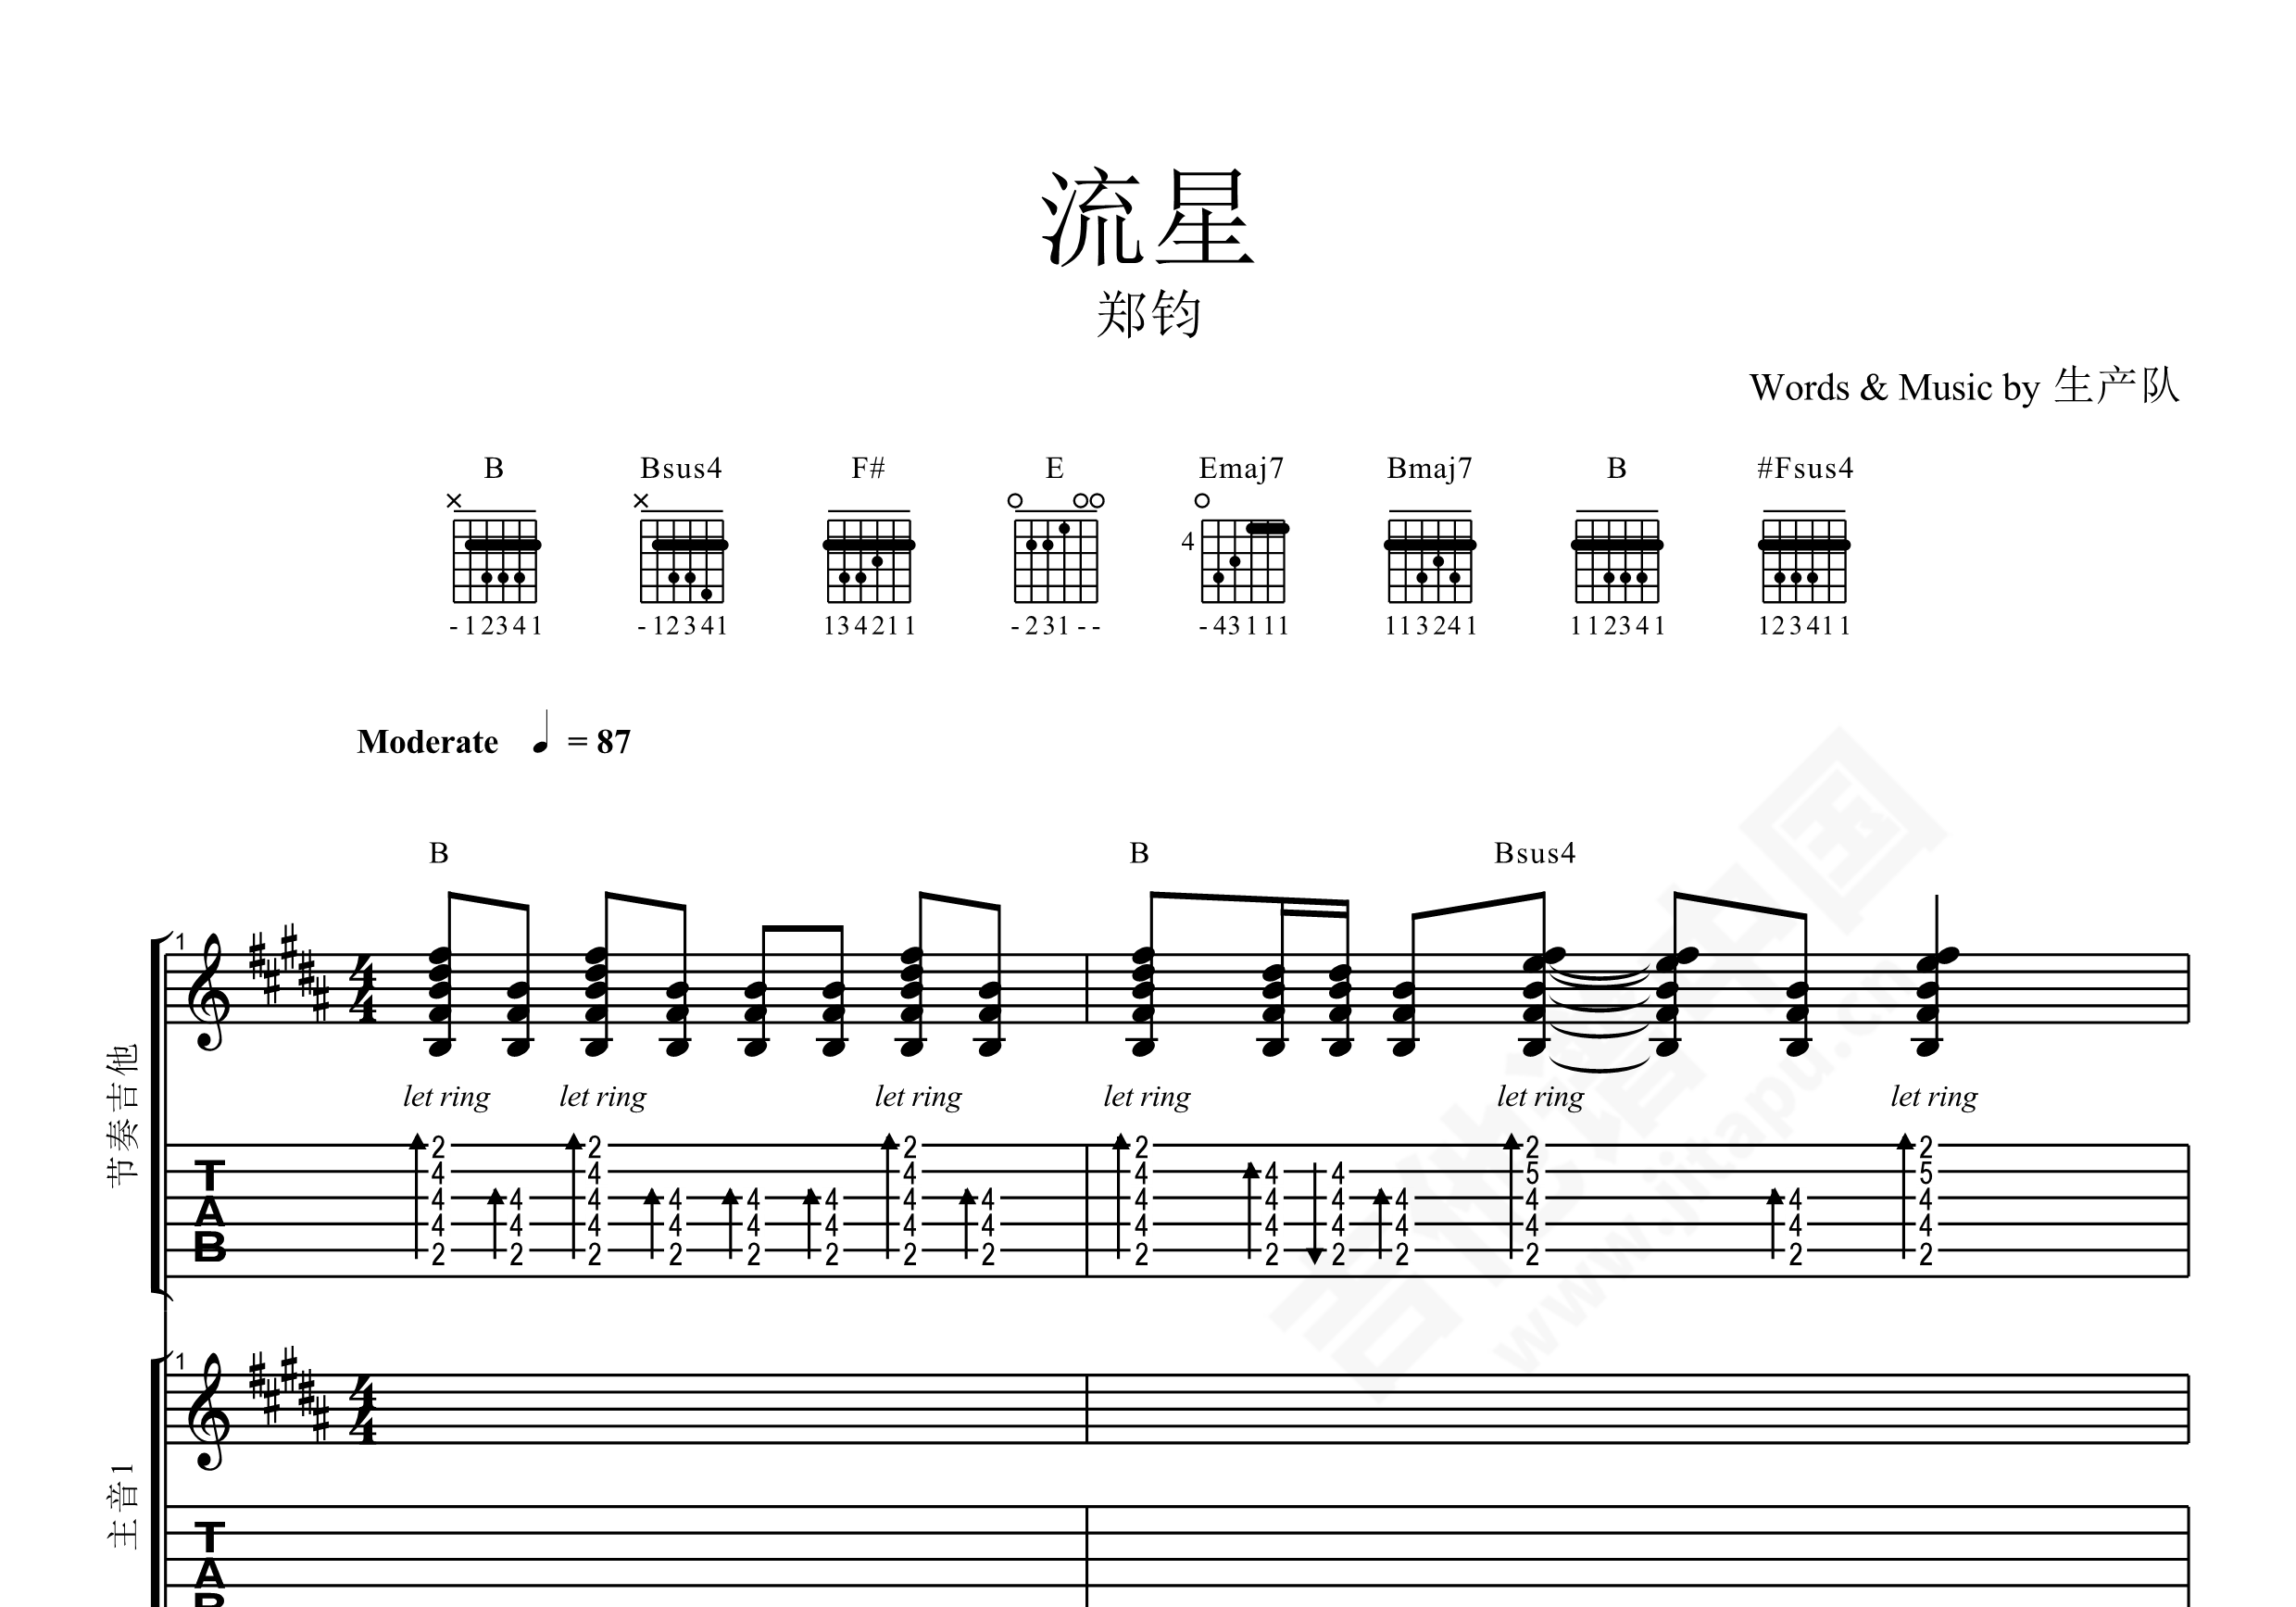 Ryuusei(流星)吉他谱 ムック-彼岸吉他 - 一站式吉他爱好者服务平台